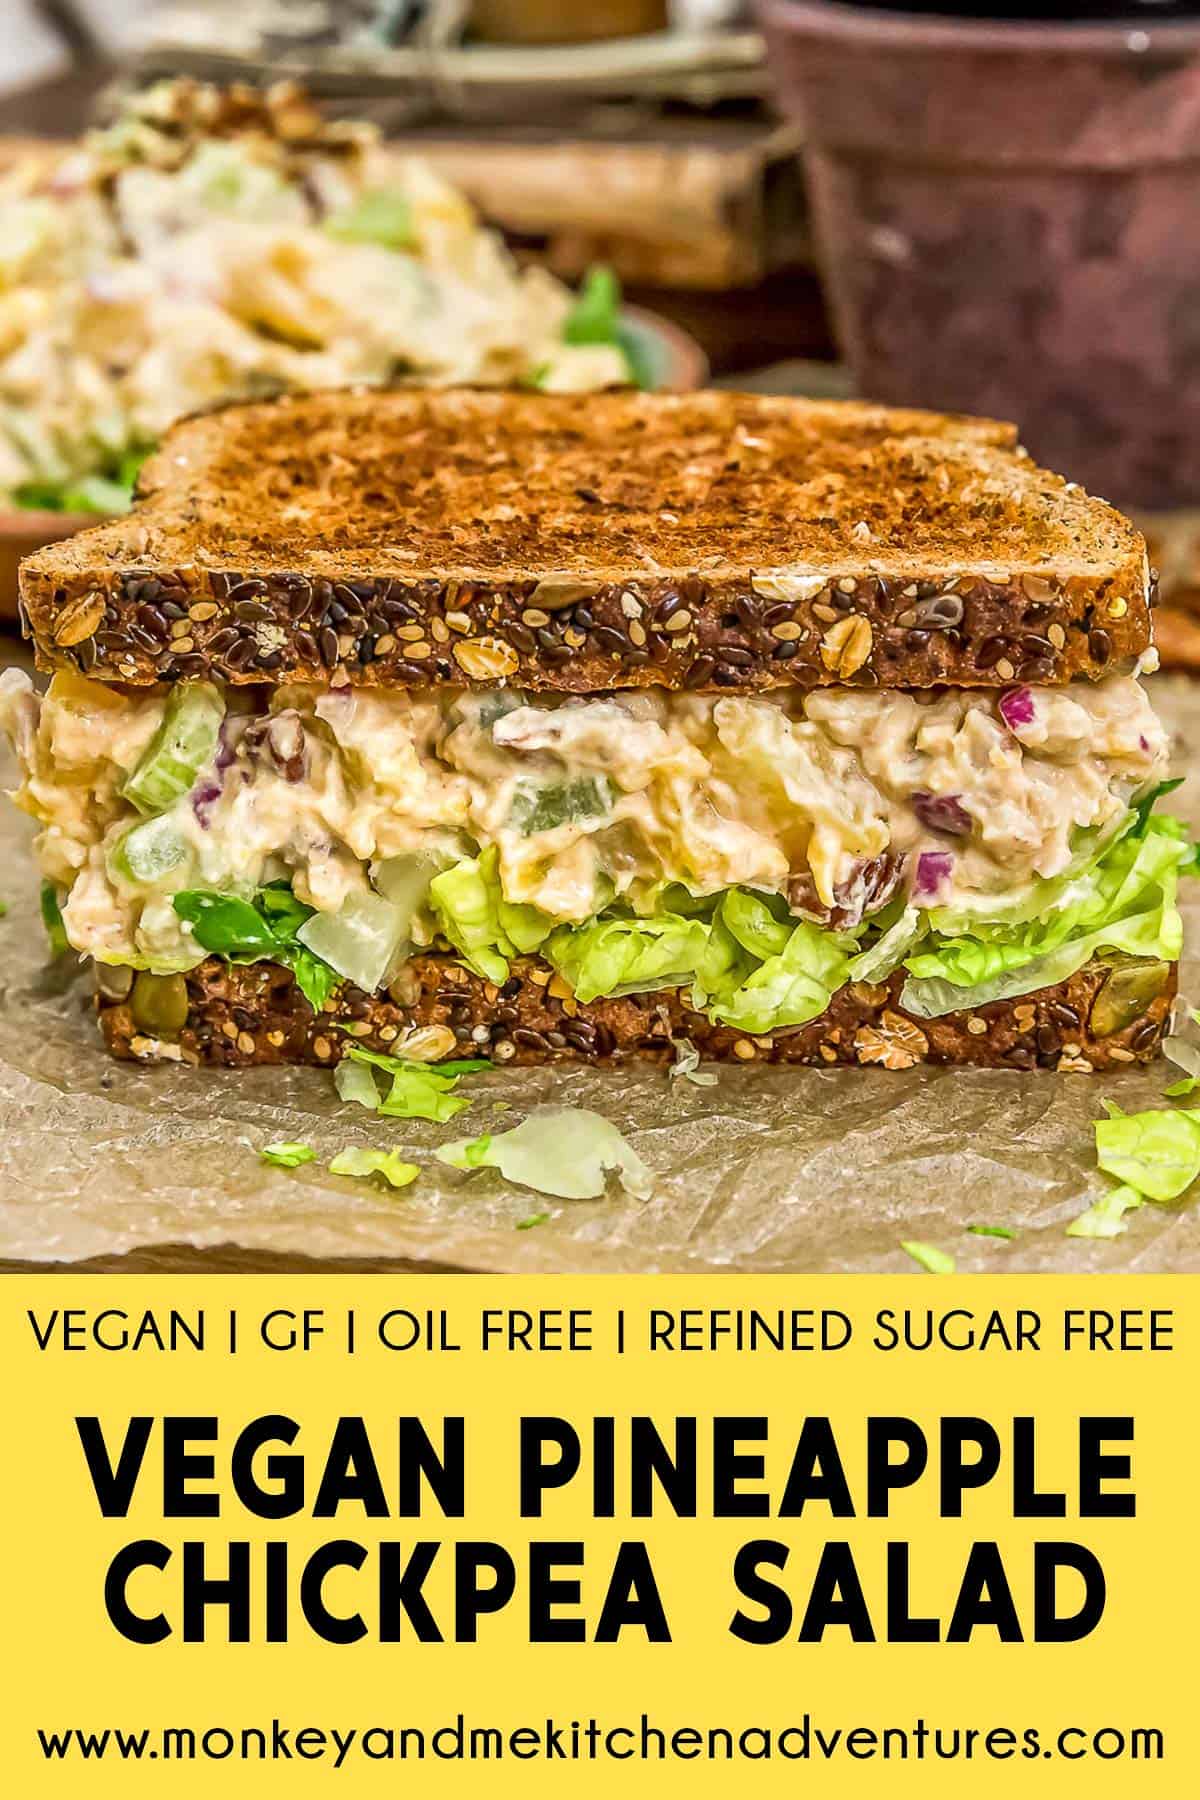 Vegan Pineapple Chickpea Salad with text description